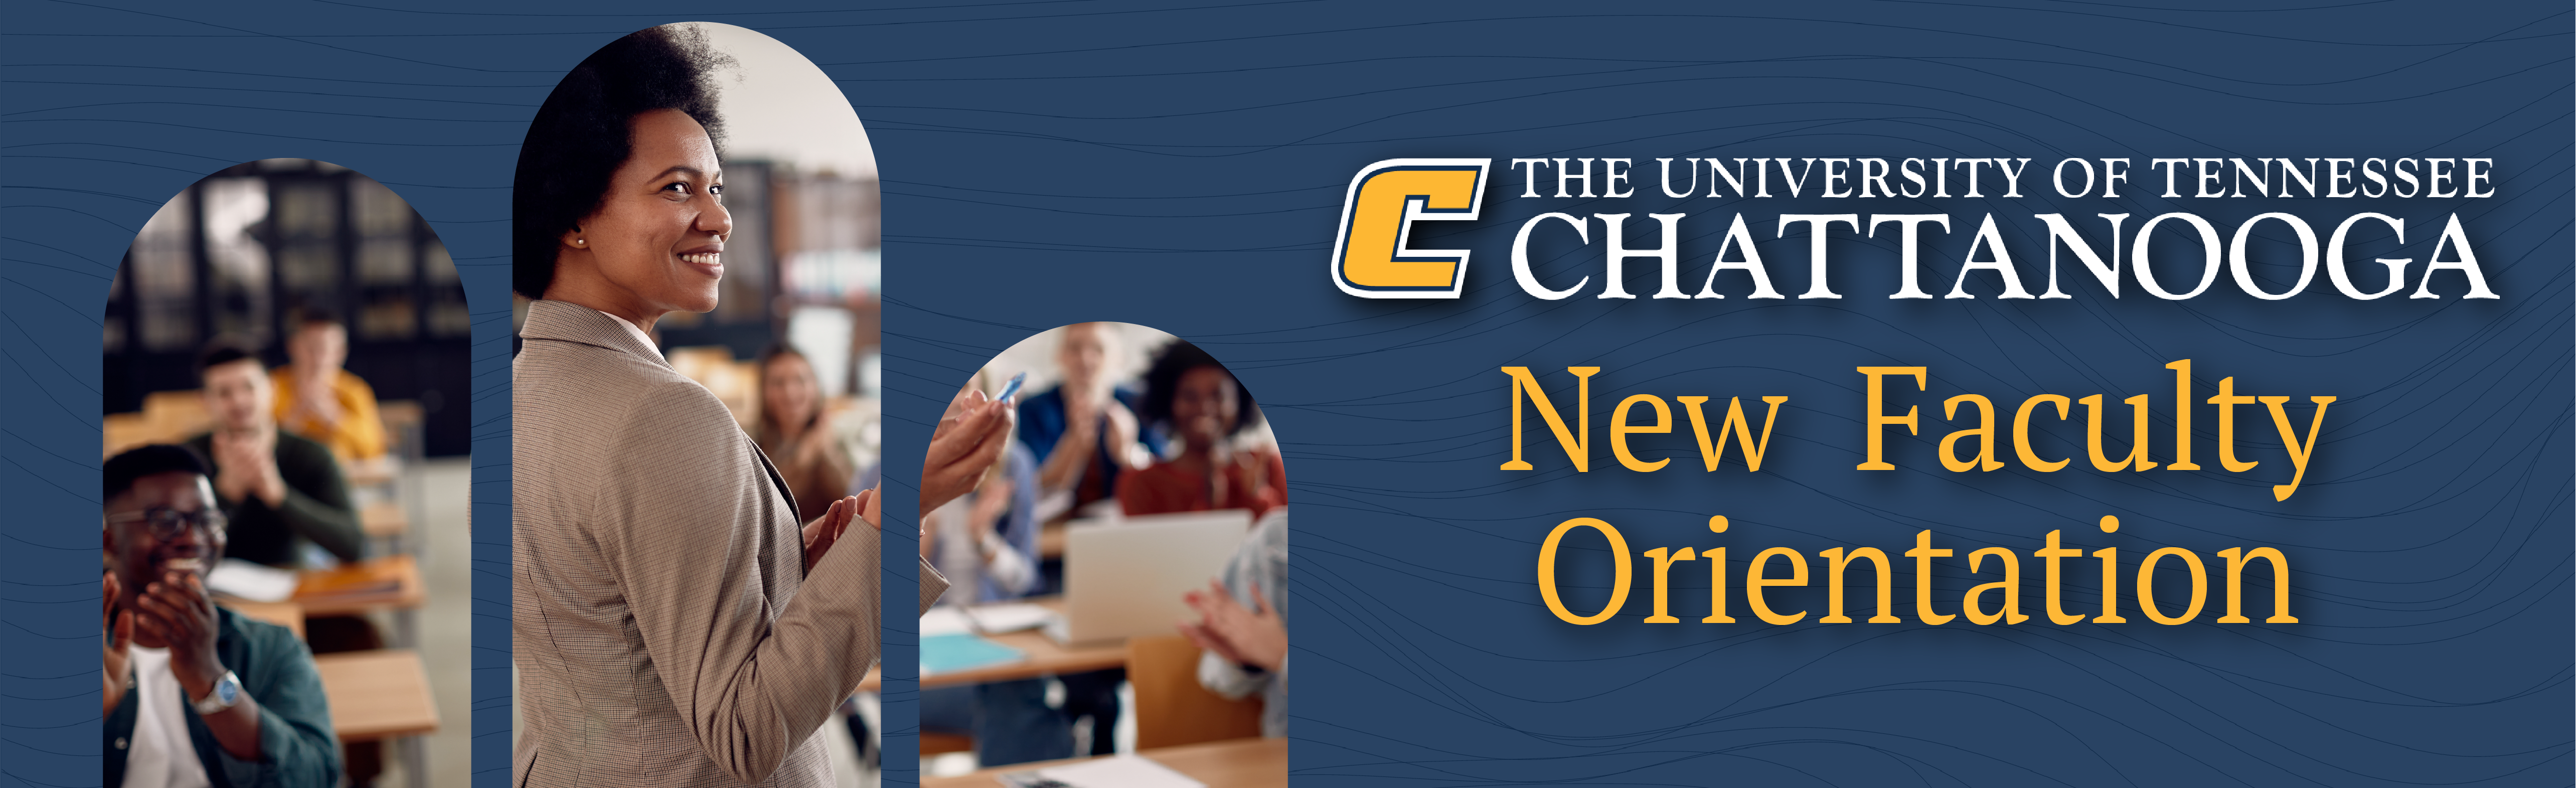 UTC New Faculty Orientation Banner